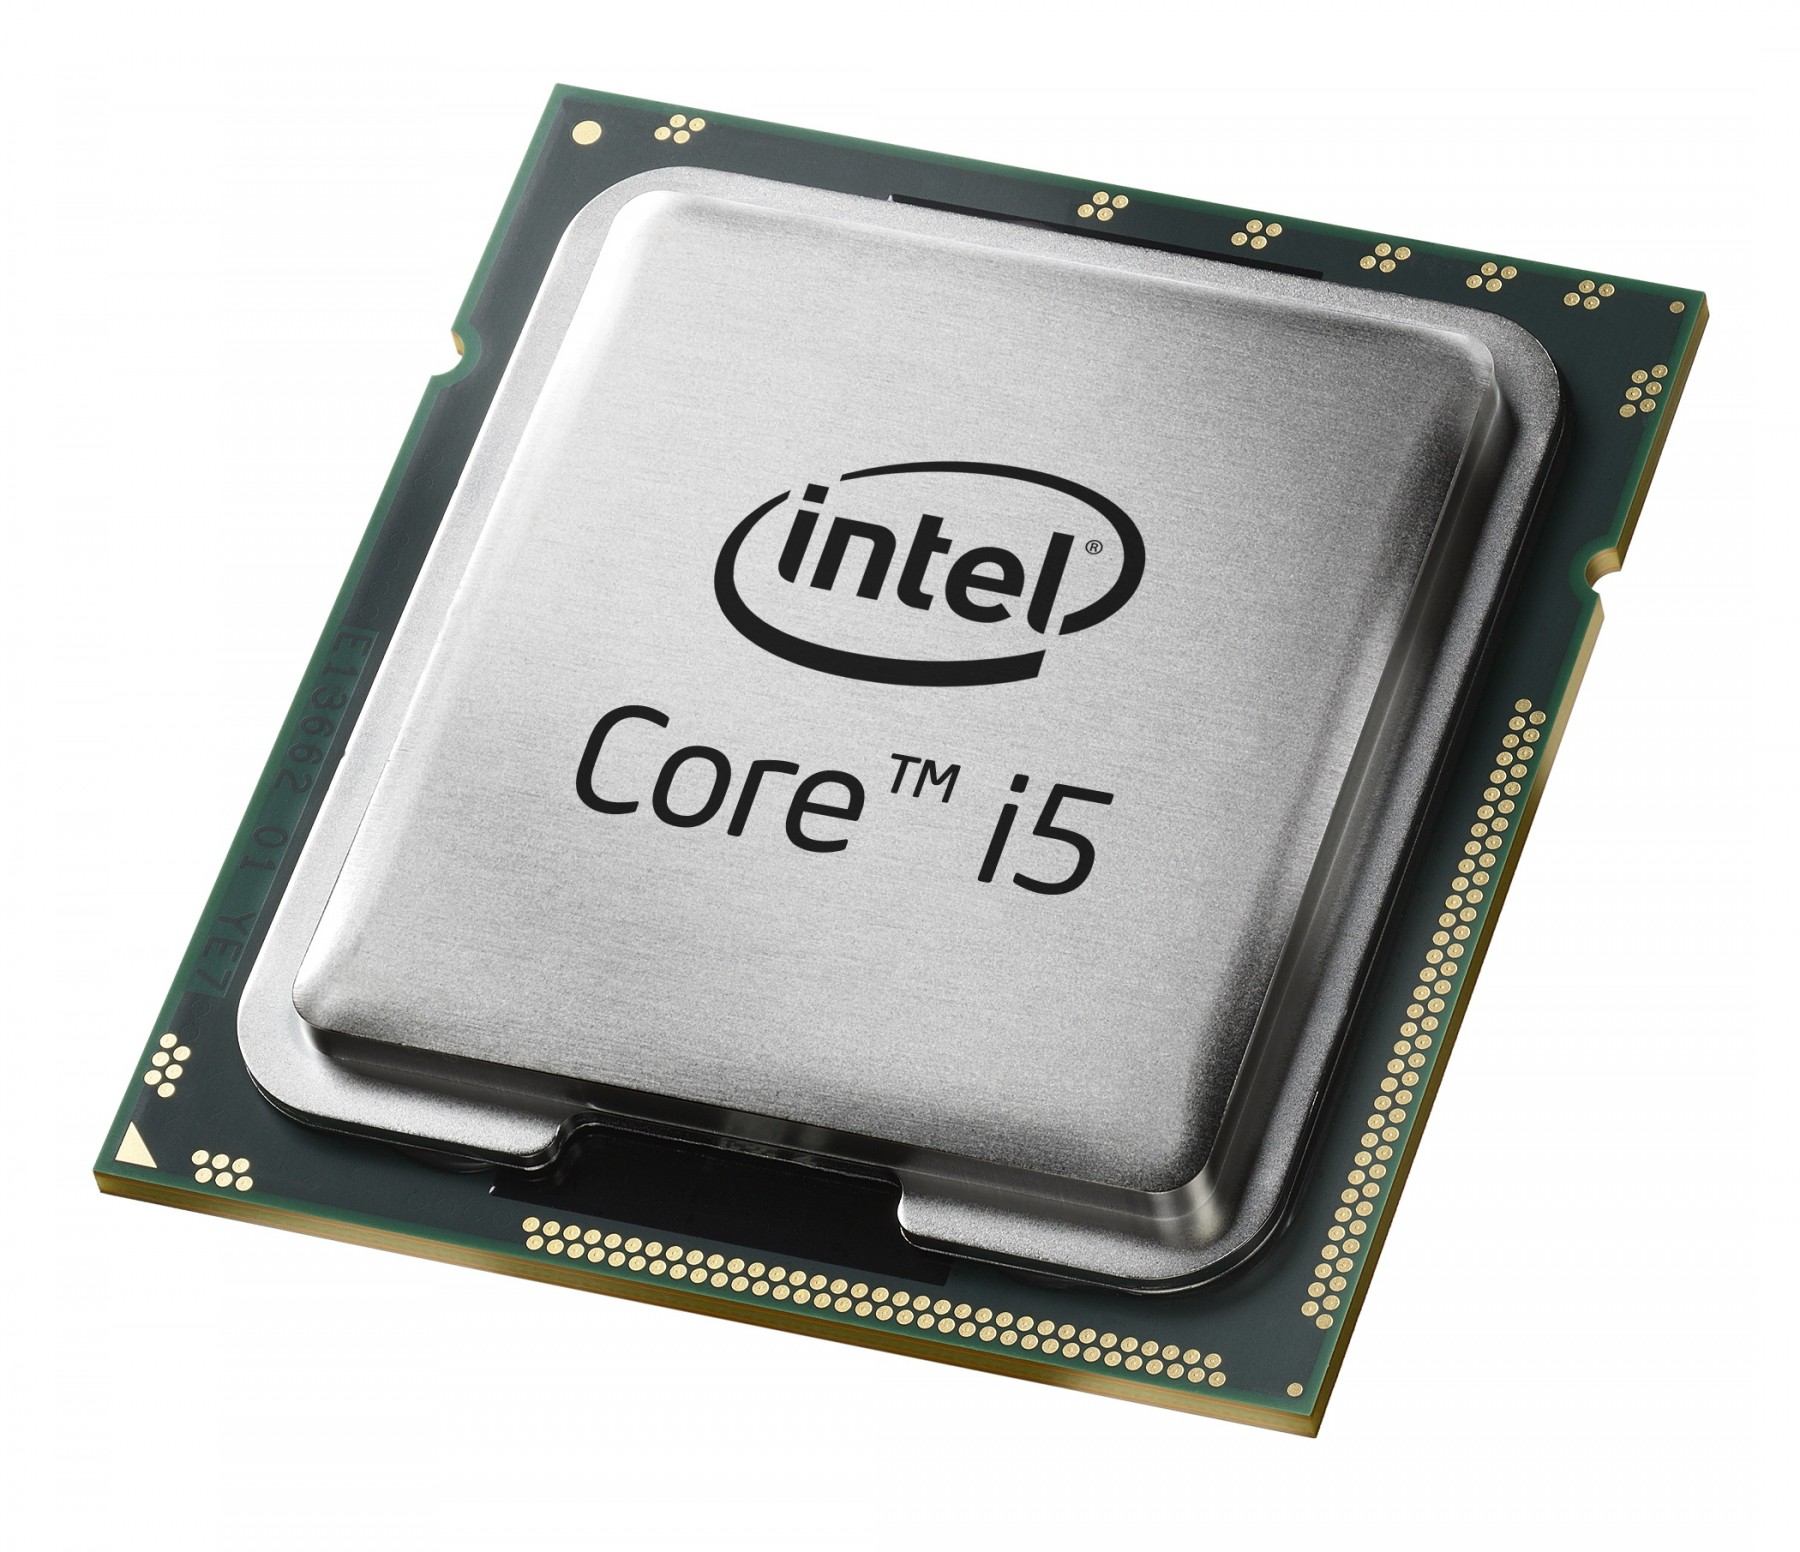 500030399-Intel Core i5-4302Y SR19B 1.6Ghz 5GT/s BGA 1168 Processor-image